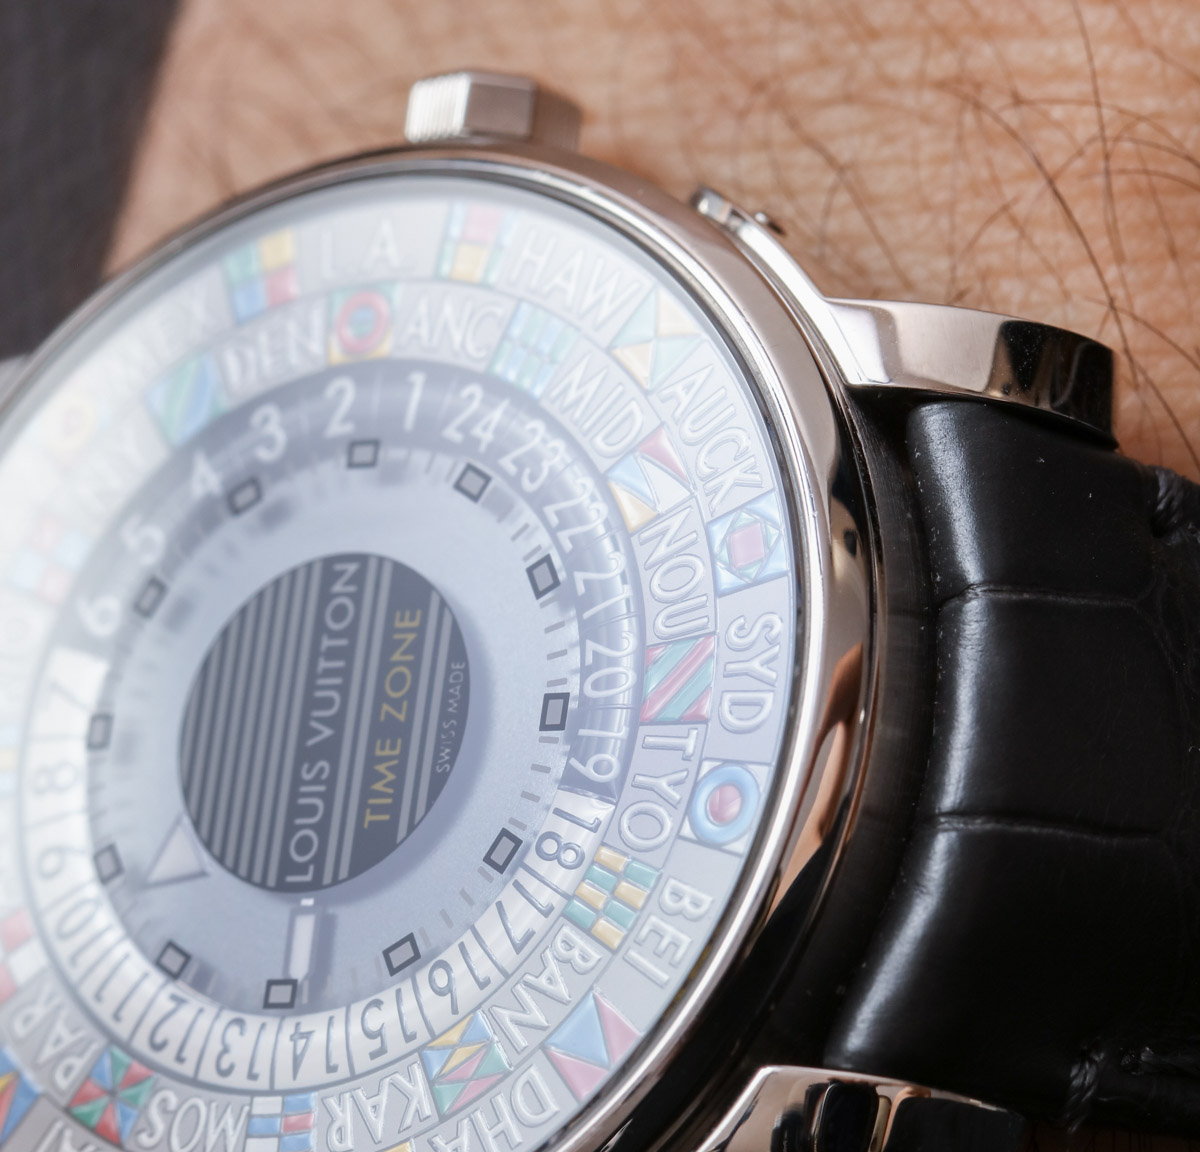 Louis Vuitton] Escale Time Zone : r/Watches